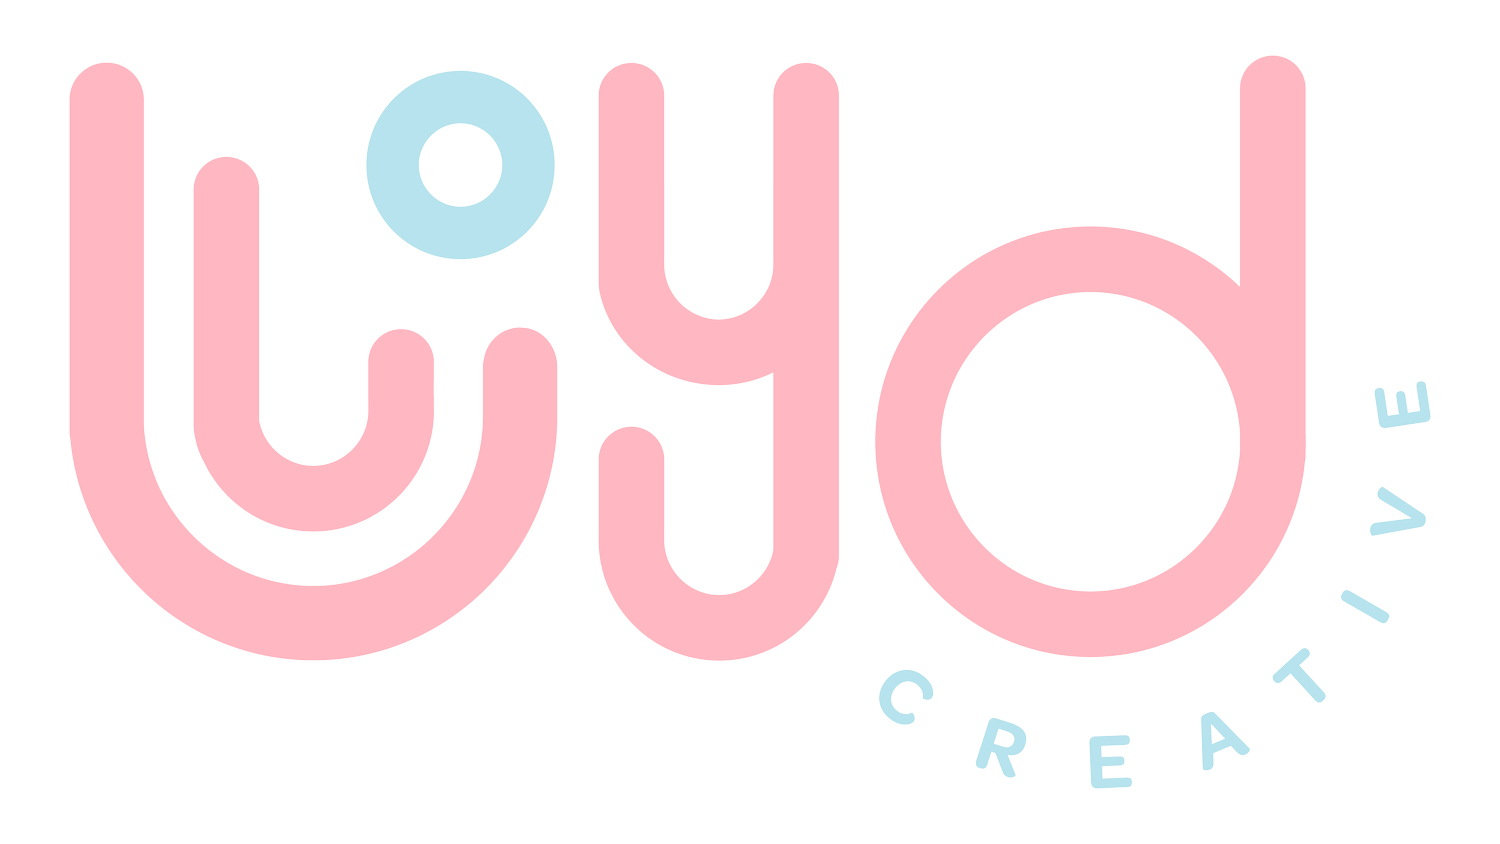 Lloyd Creative